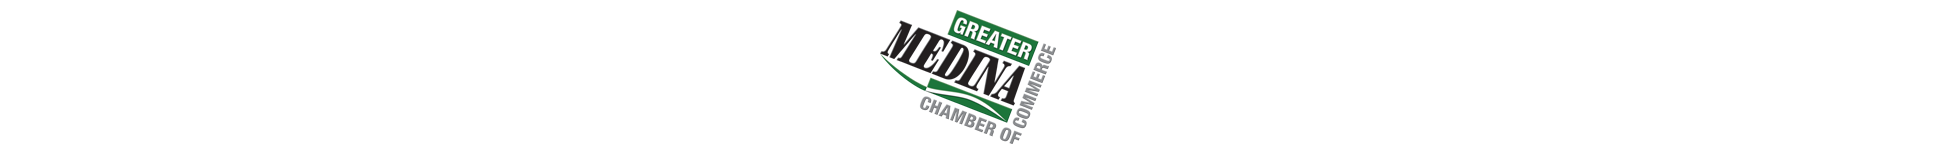 Greater Medina Chamber of Commerce